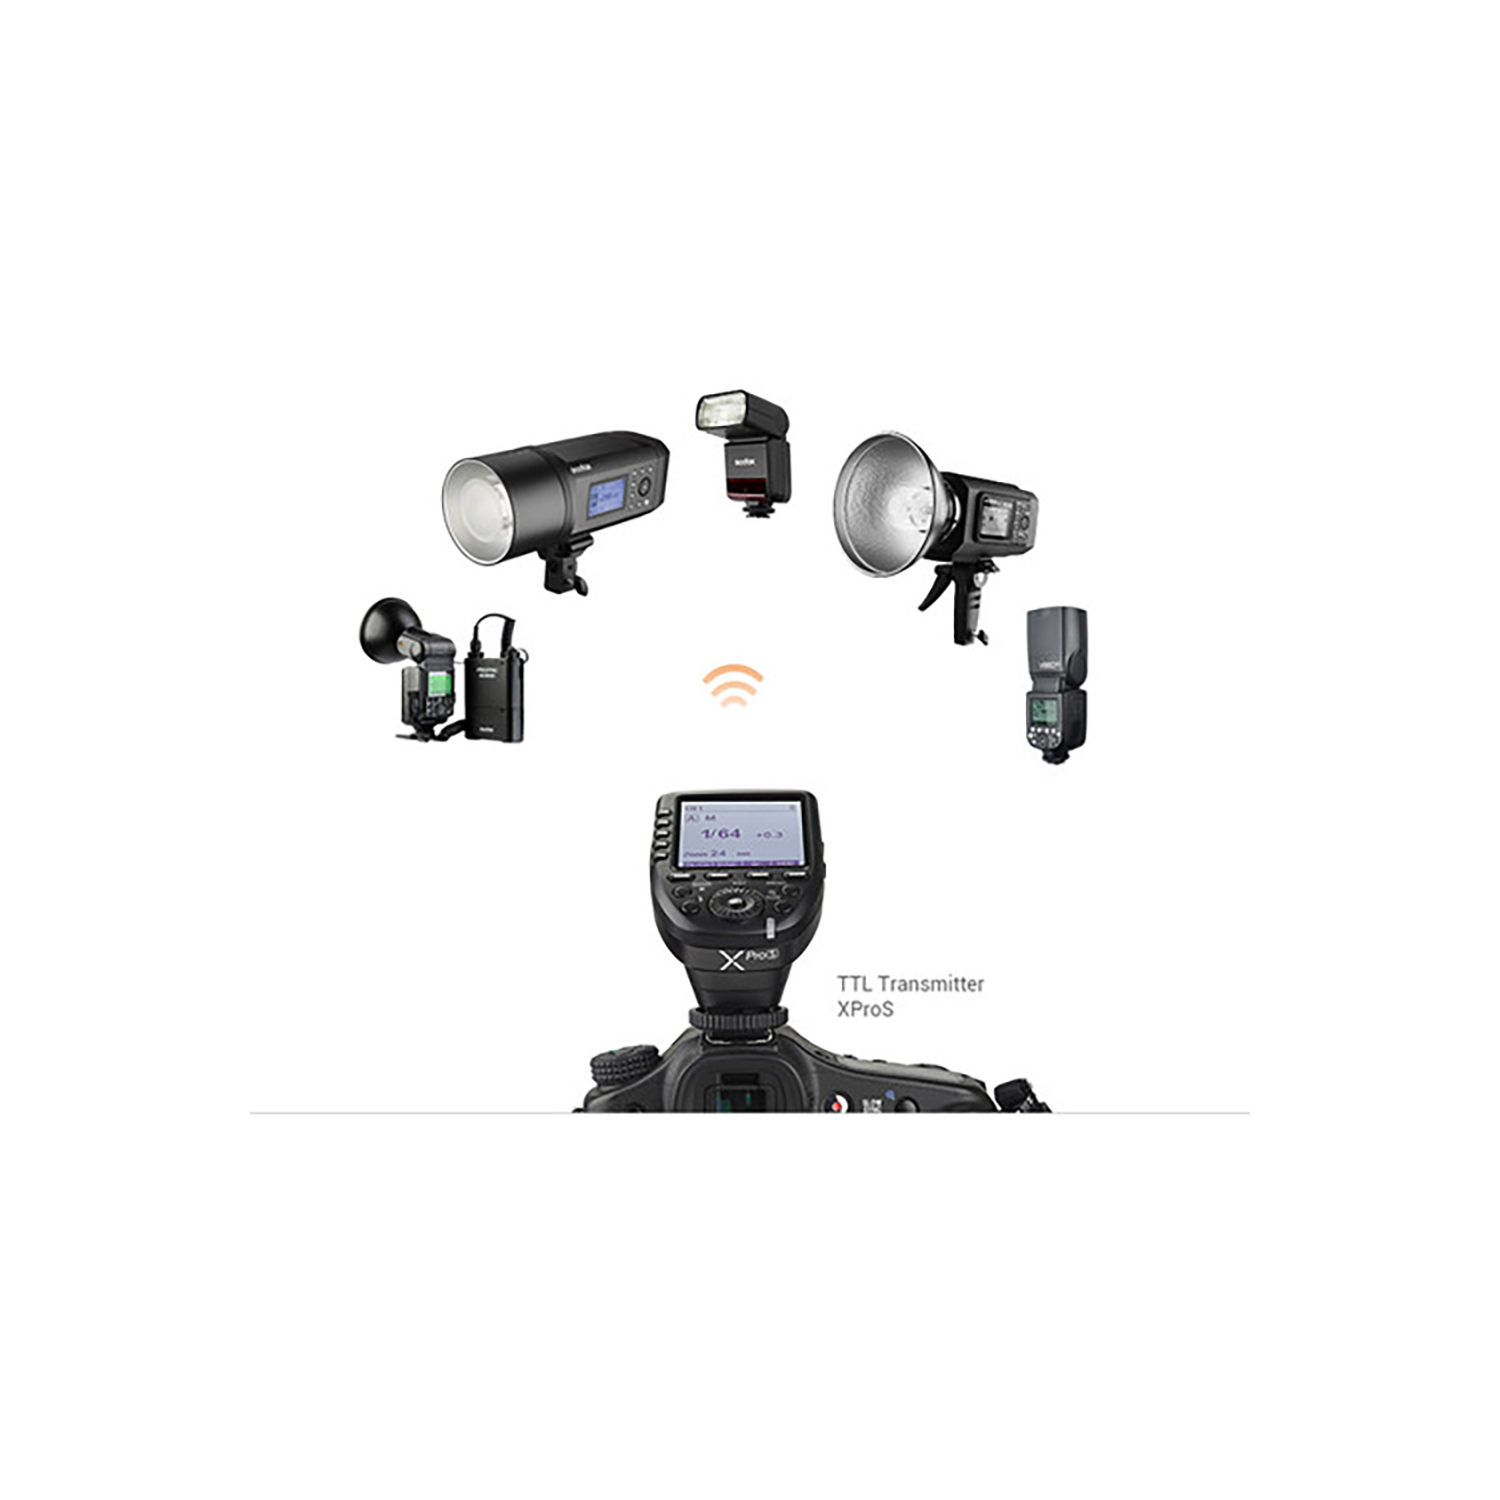 Godox V350S Flash for Select Sony Cameras